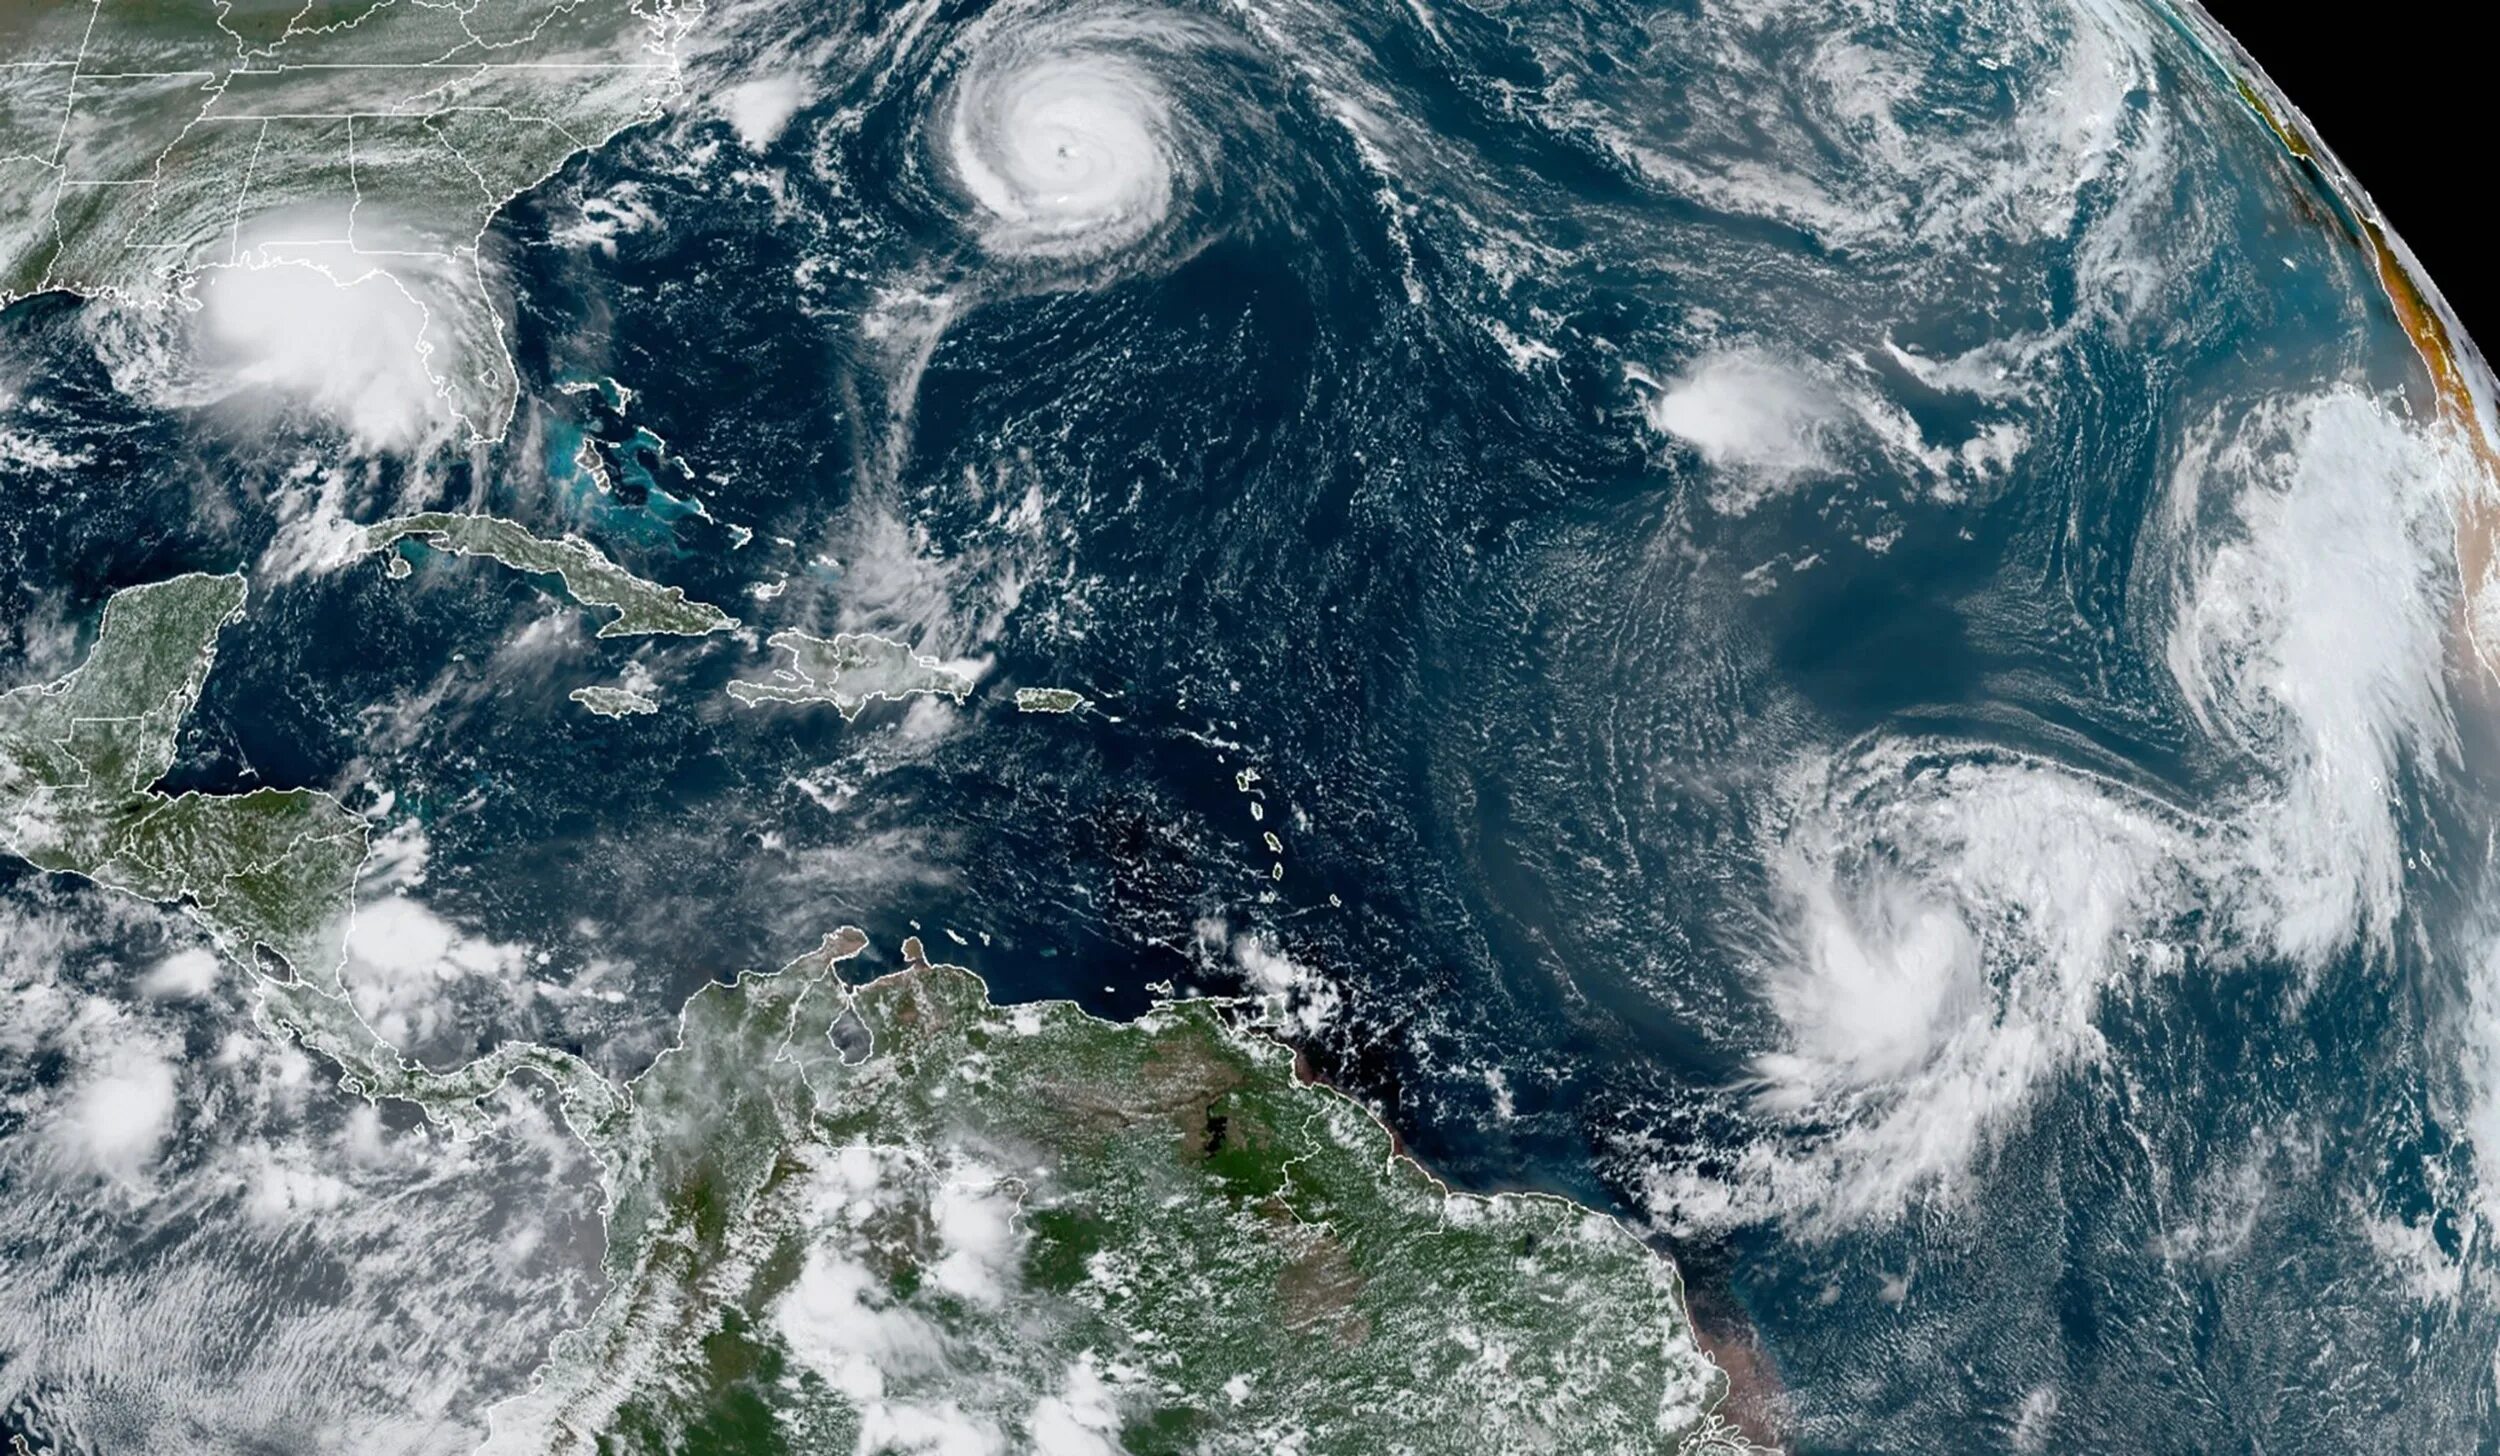 Гольфстрим из космоса. Ураган Атлантика. Атлантический океан снимок из космоса. Ураган в Атлантическом океане. Климат бассейна атлантического океана